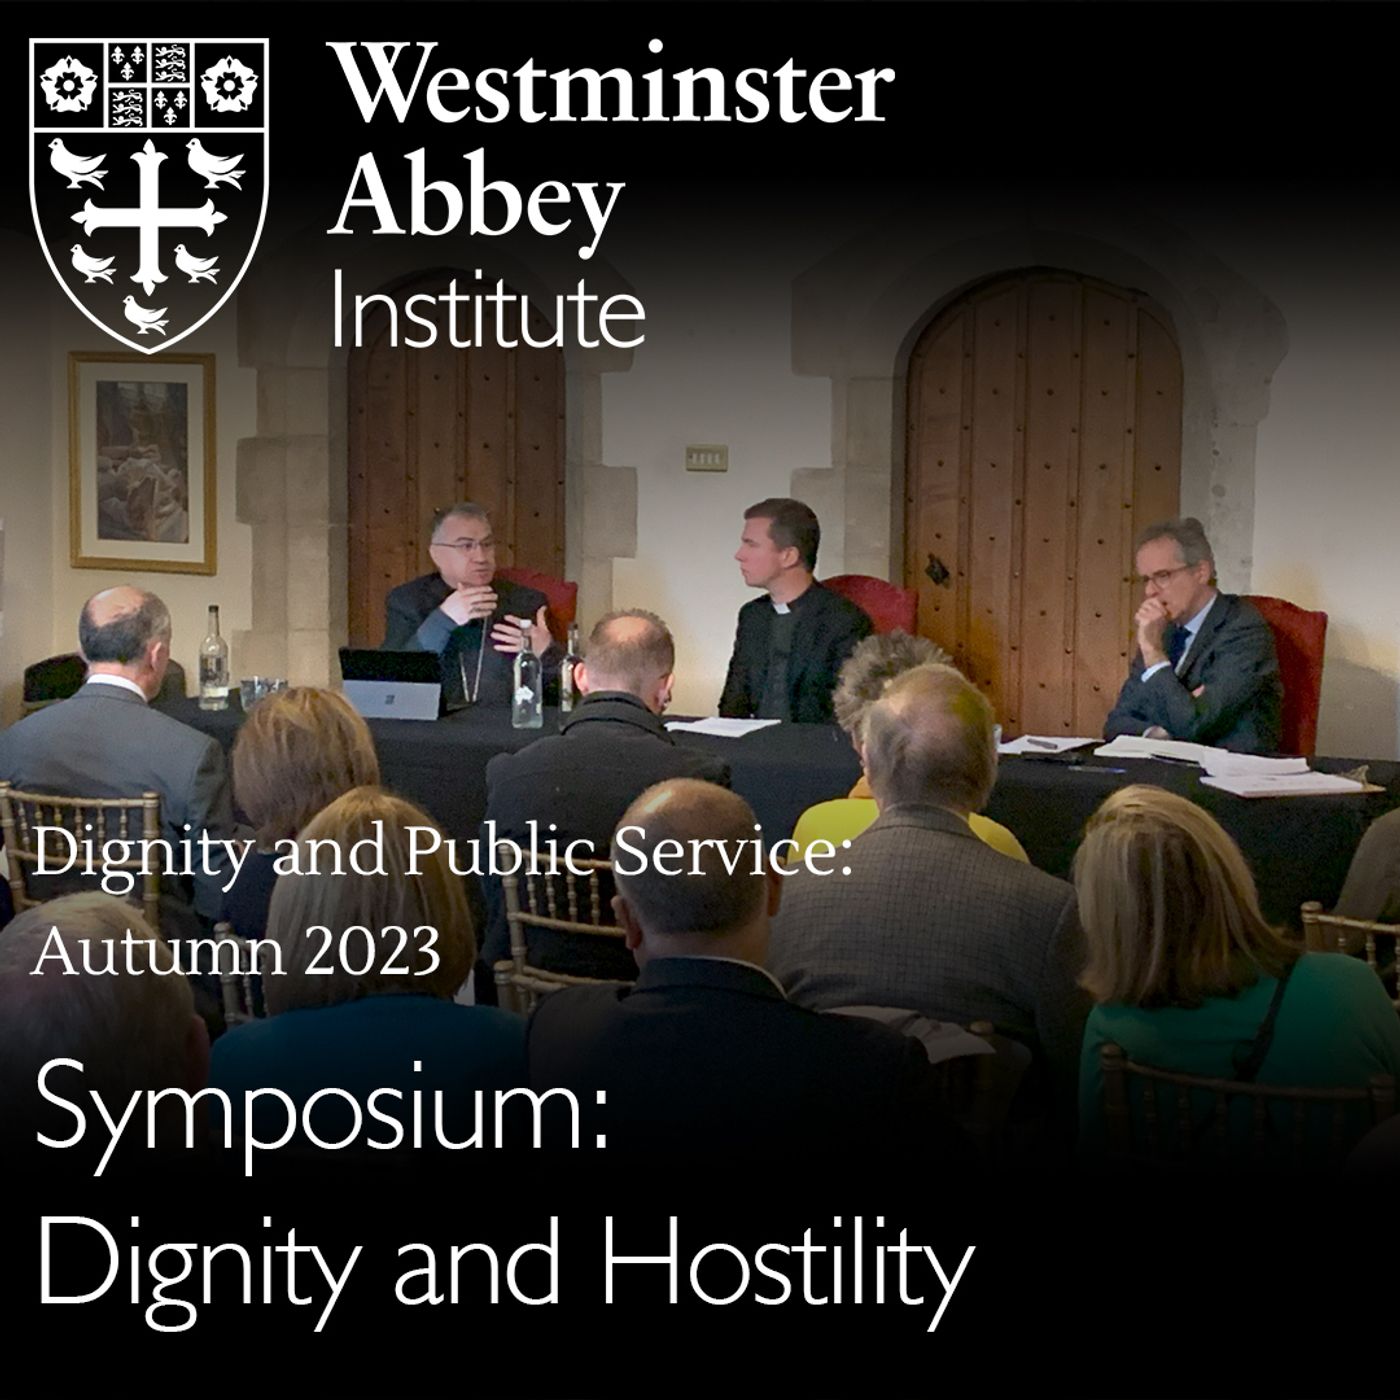 Symposium: Dignity and Hostility